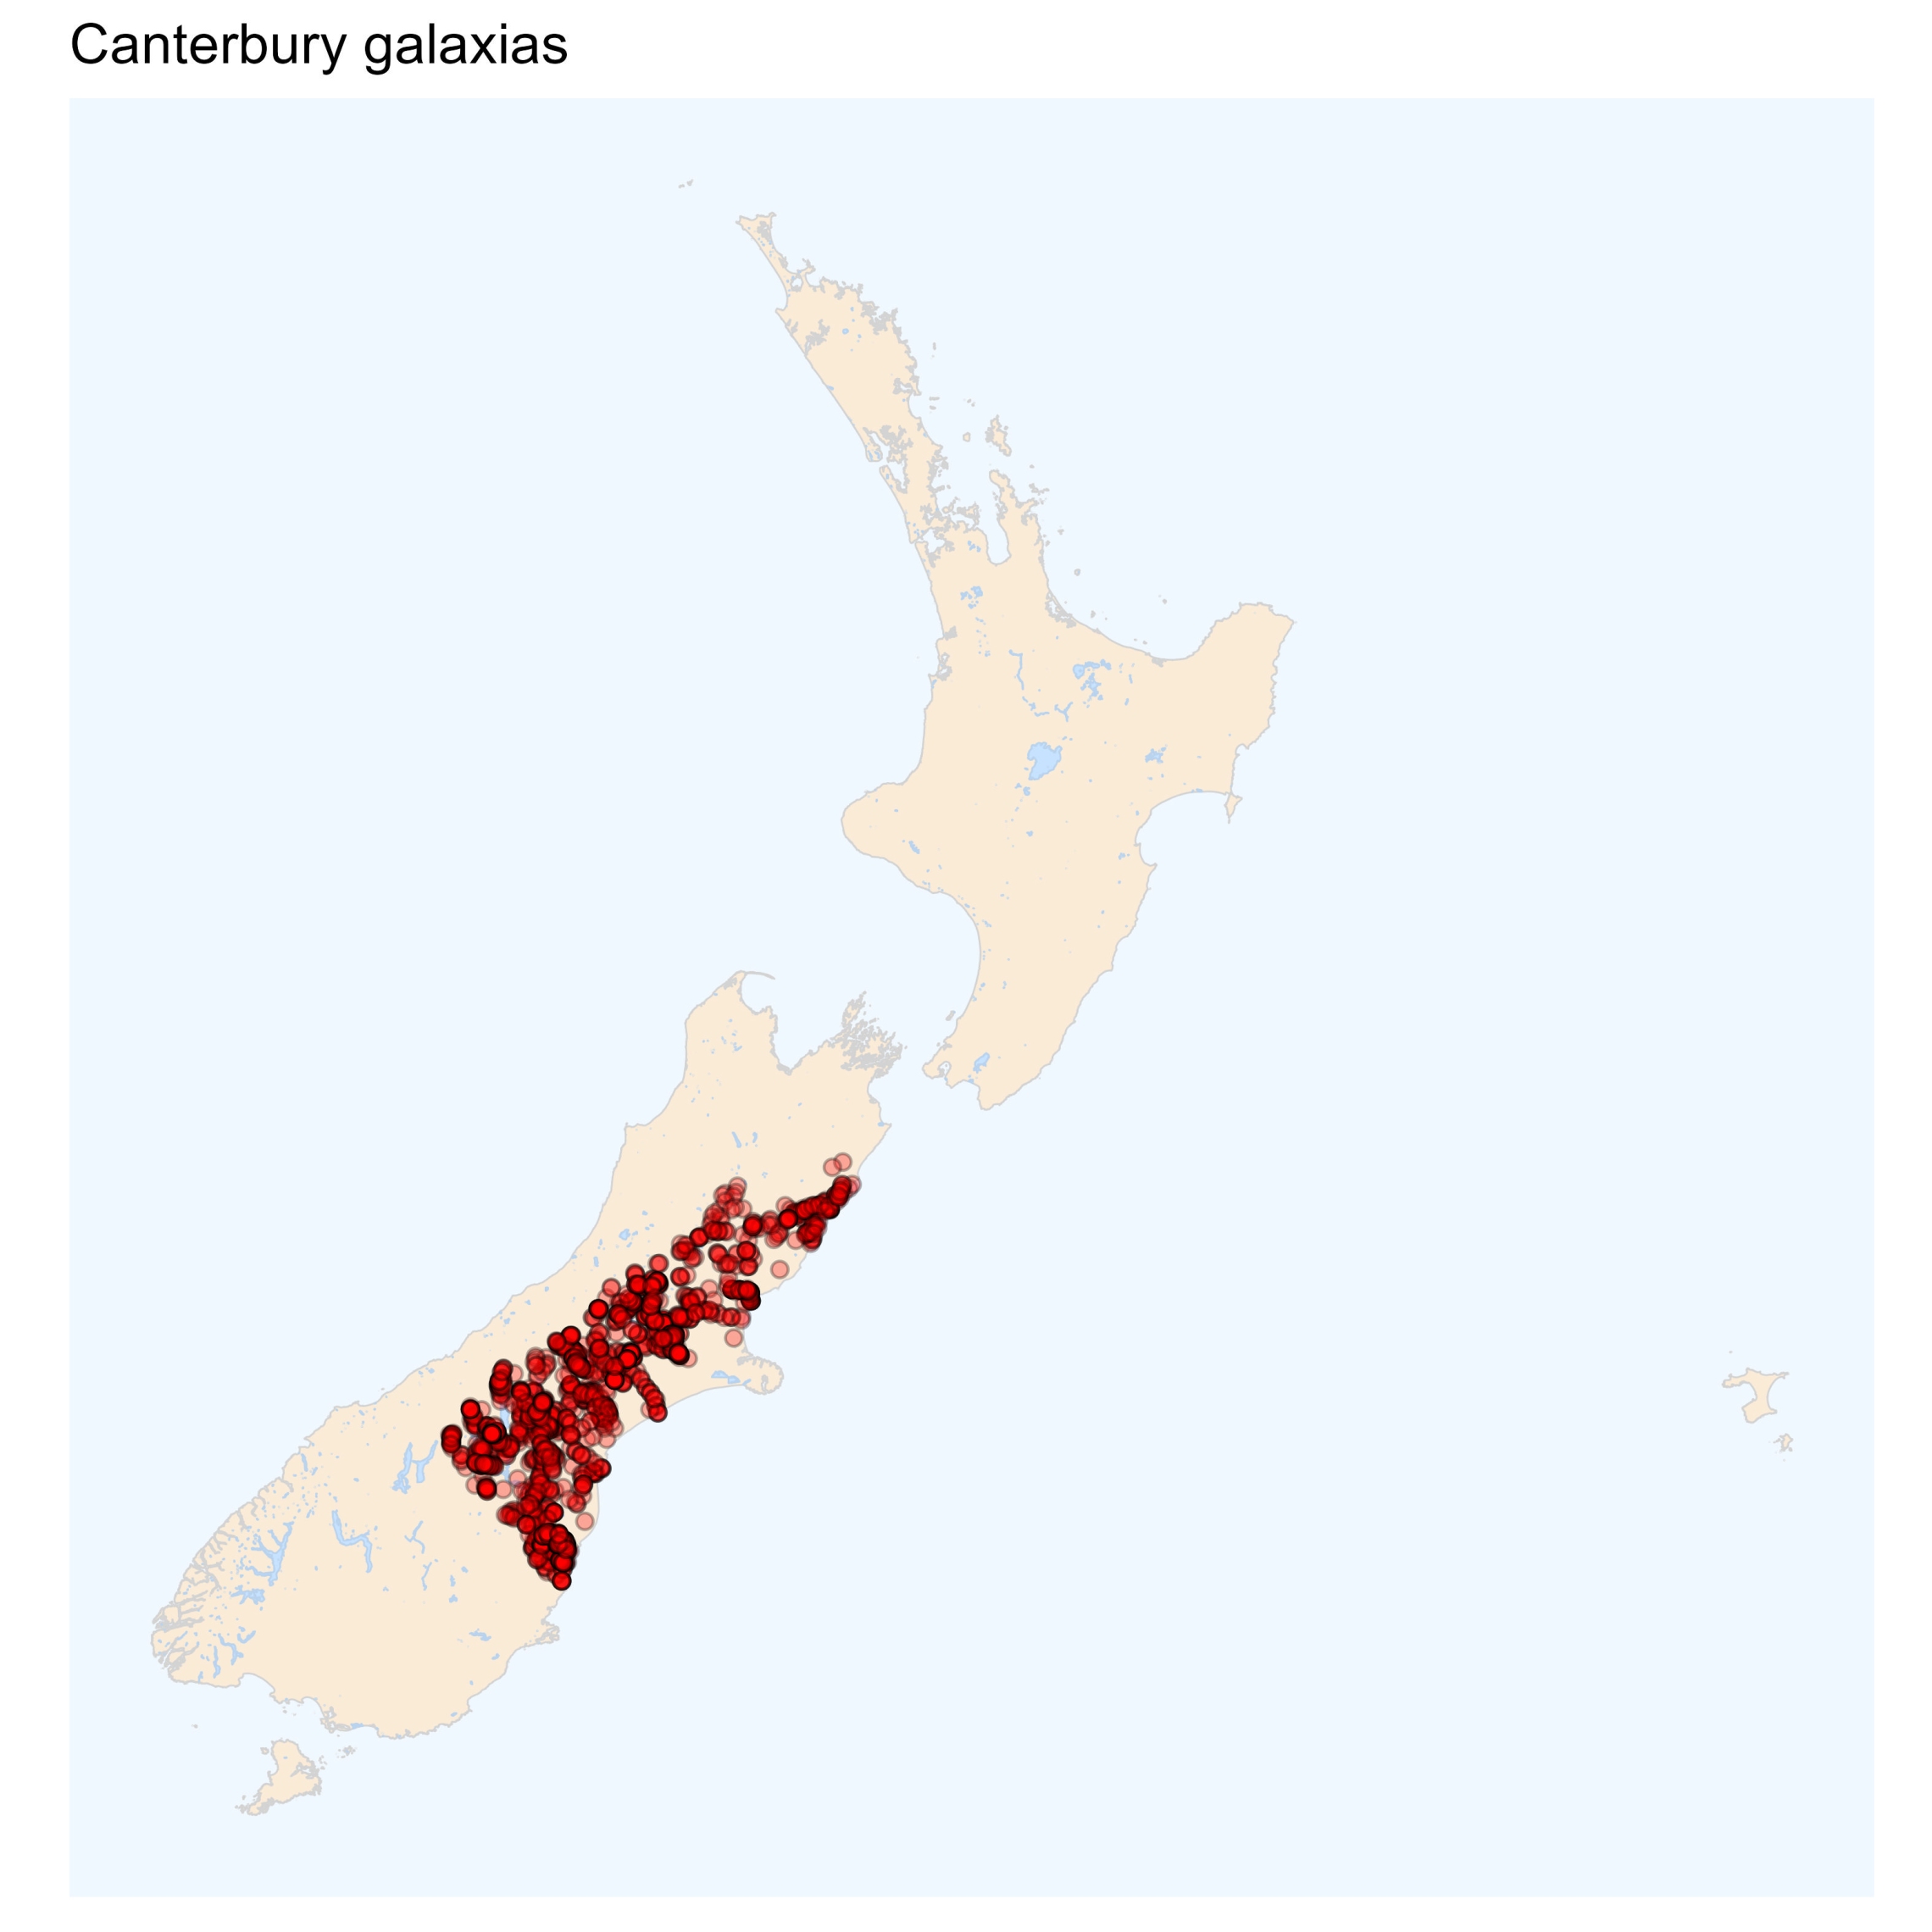 Canterbury galaxias - distribution map [NIWA]